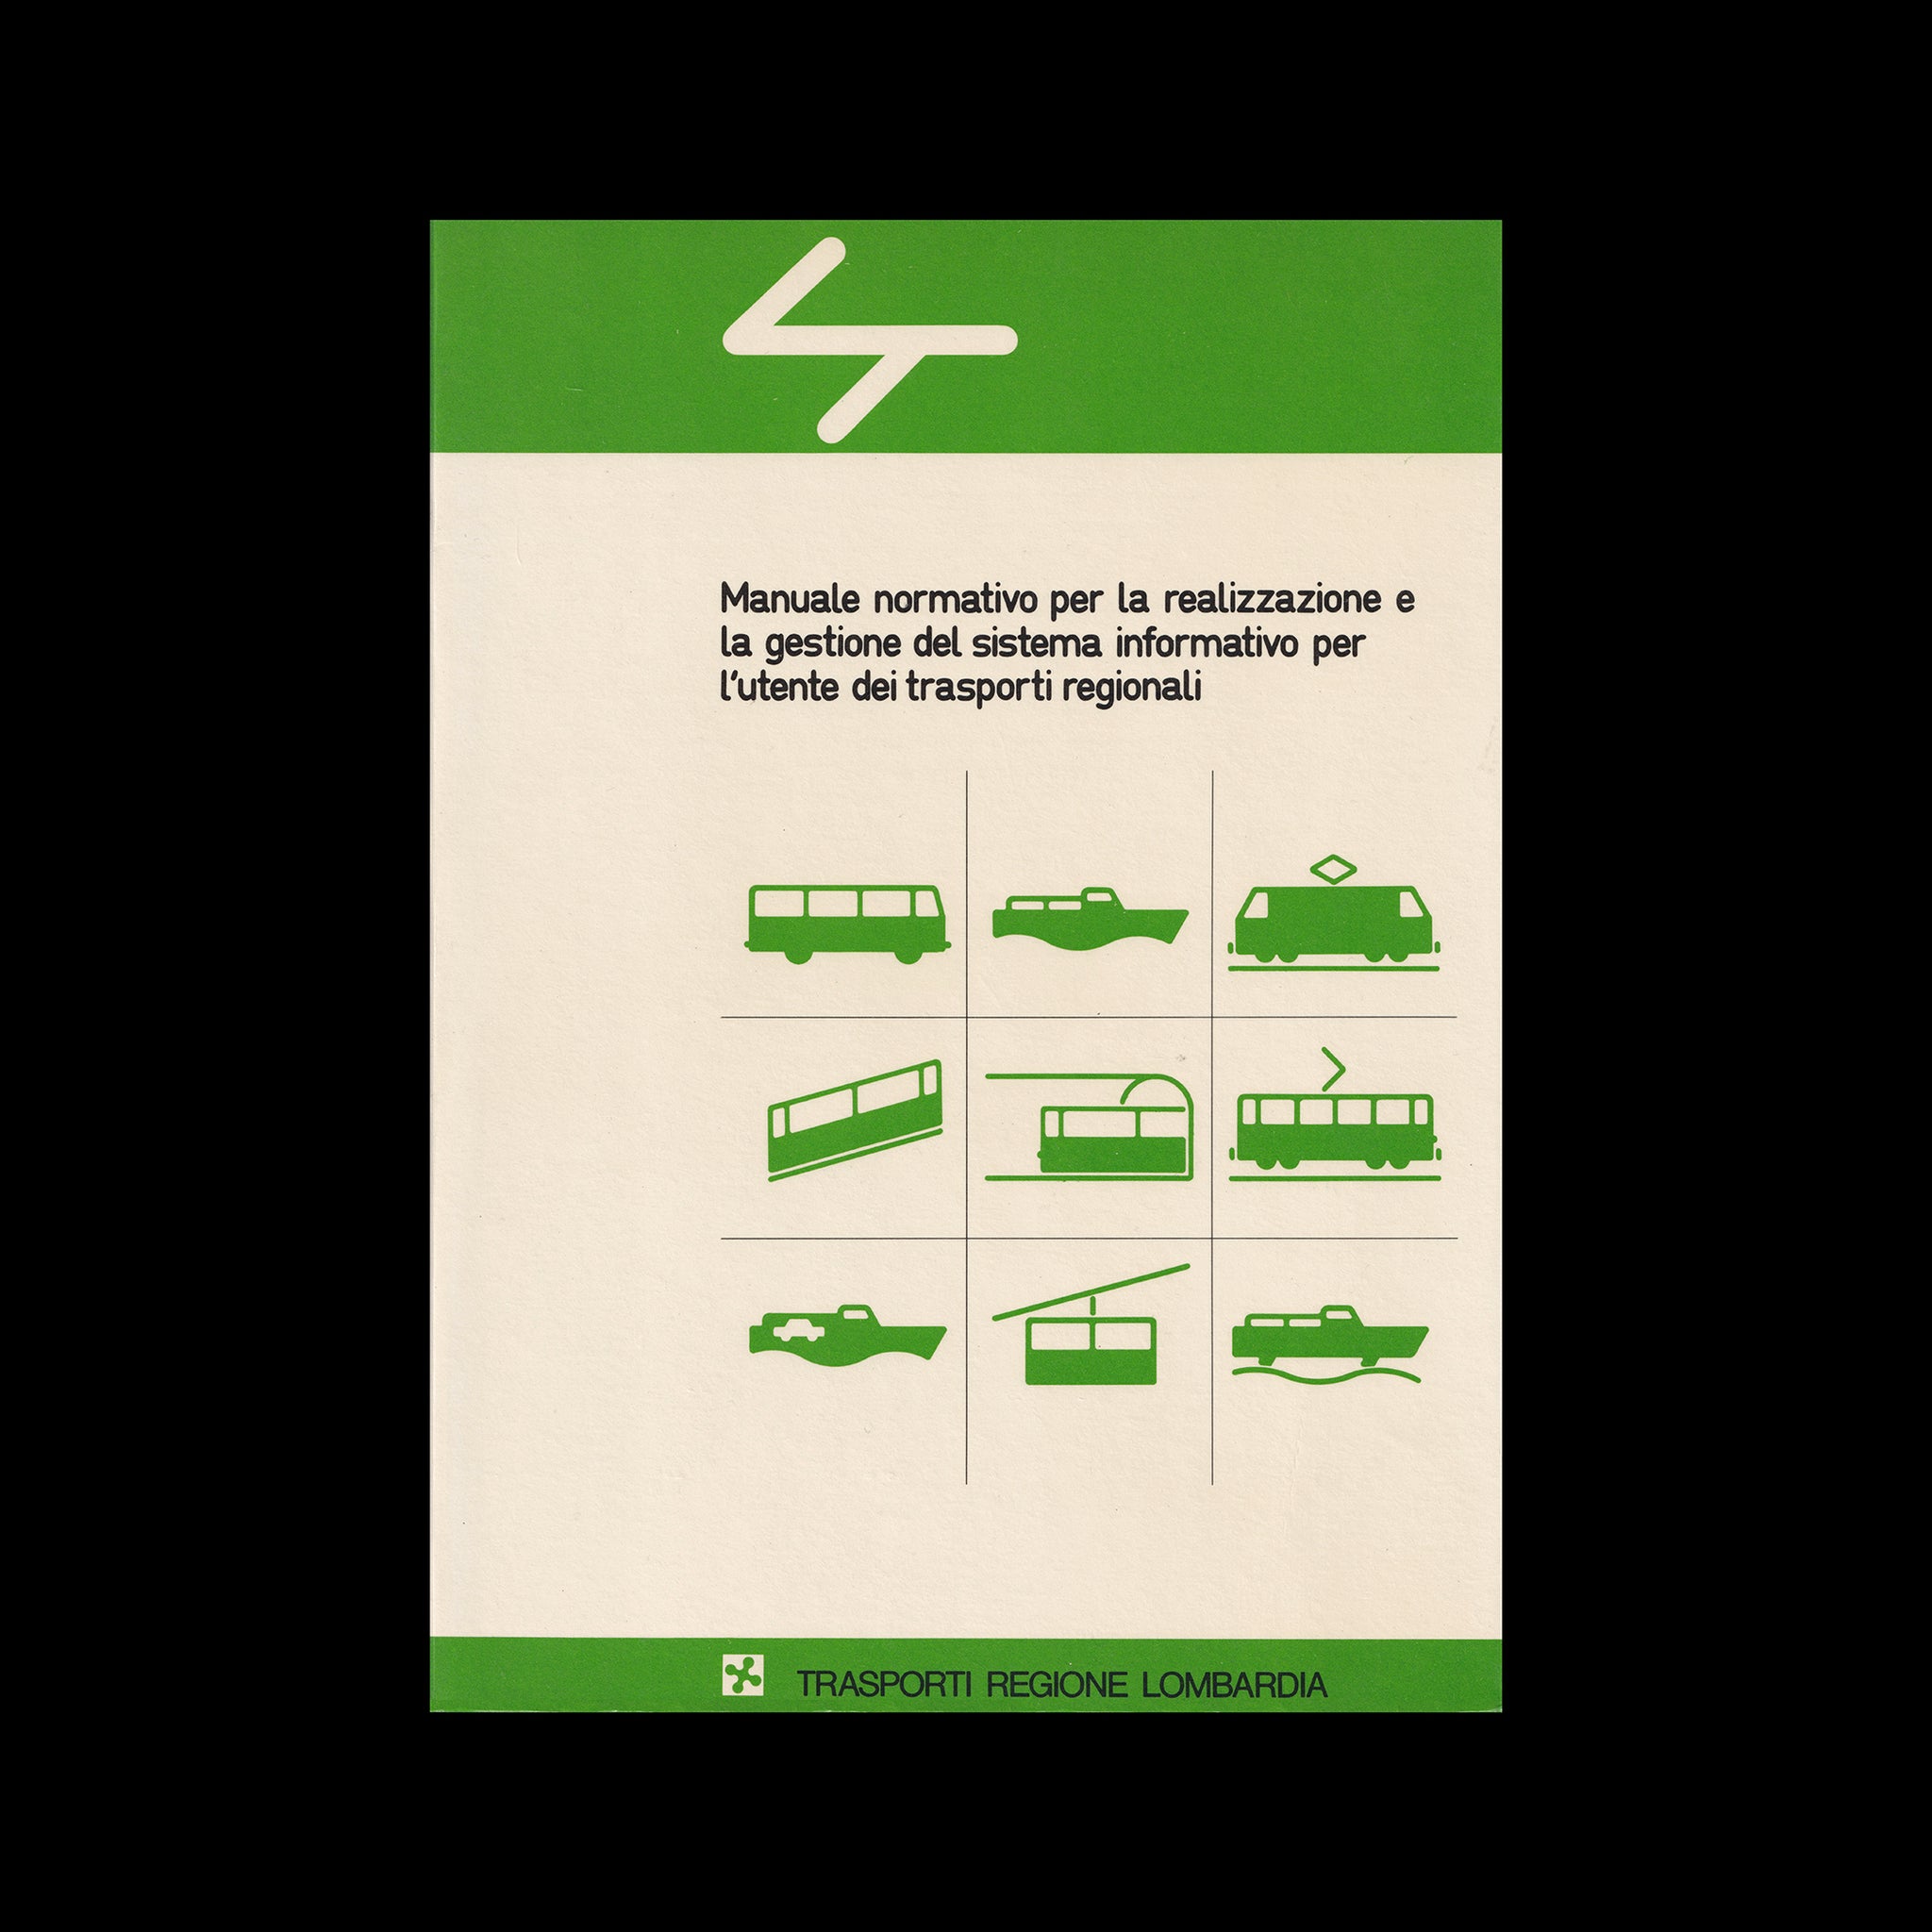 Transporti Regione Lombardia Brand Guidelines, 1981